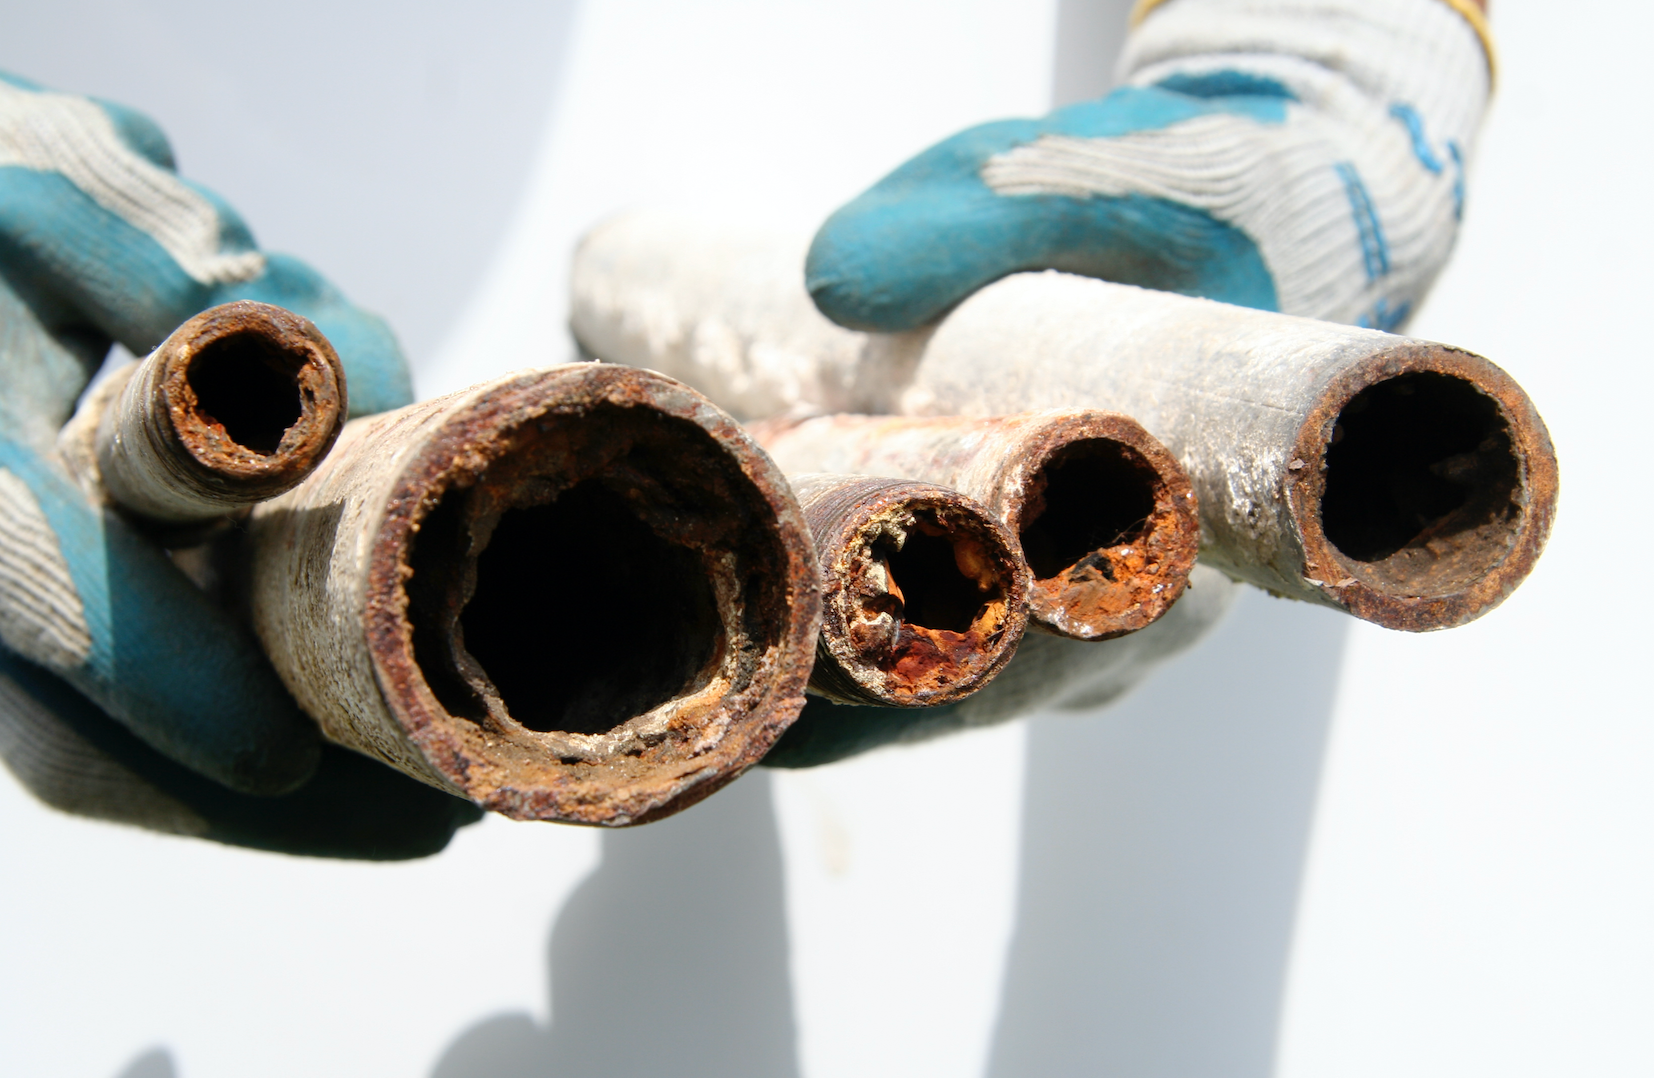 o unclog or repair your sewage pipes